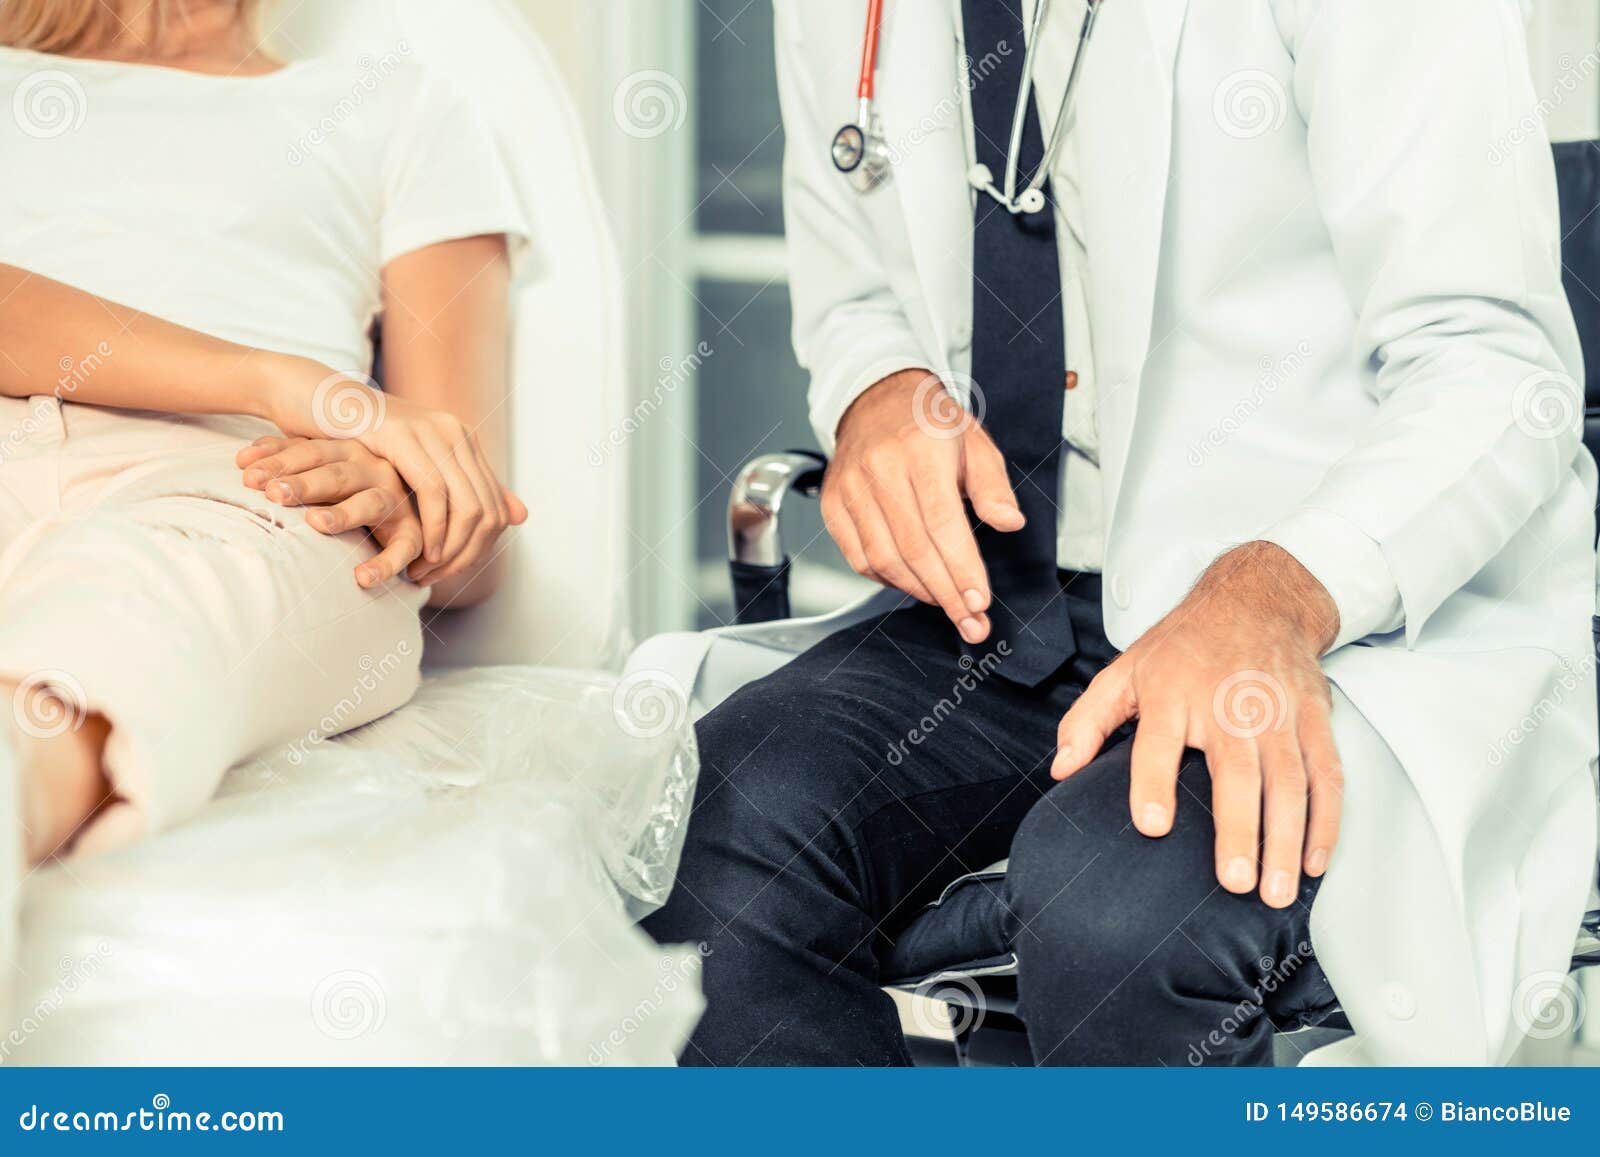 patient visits doctor